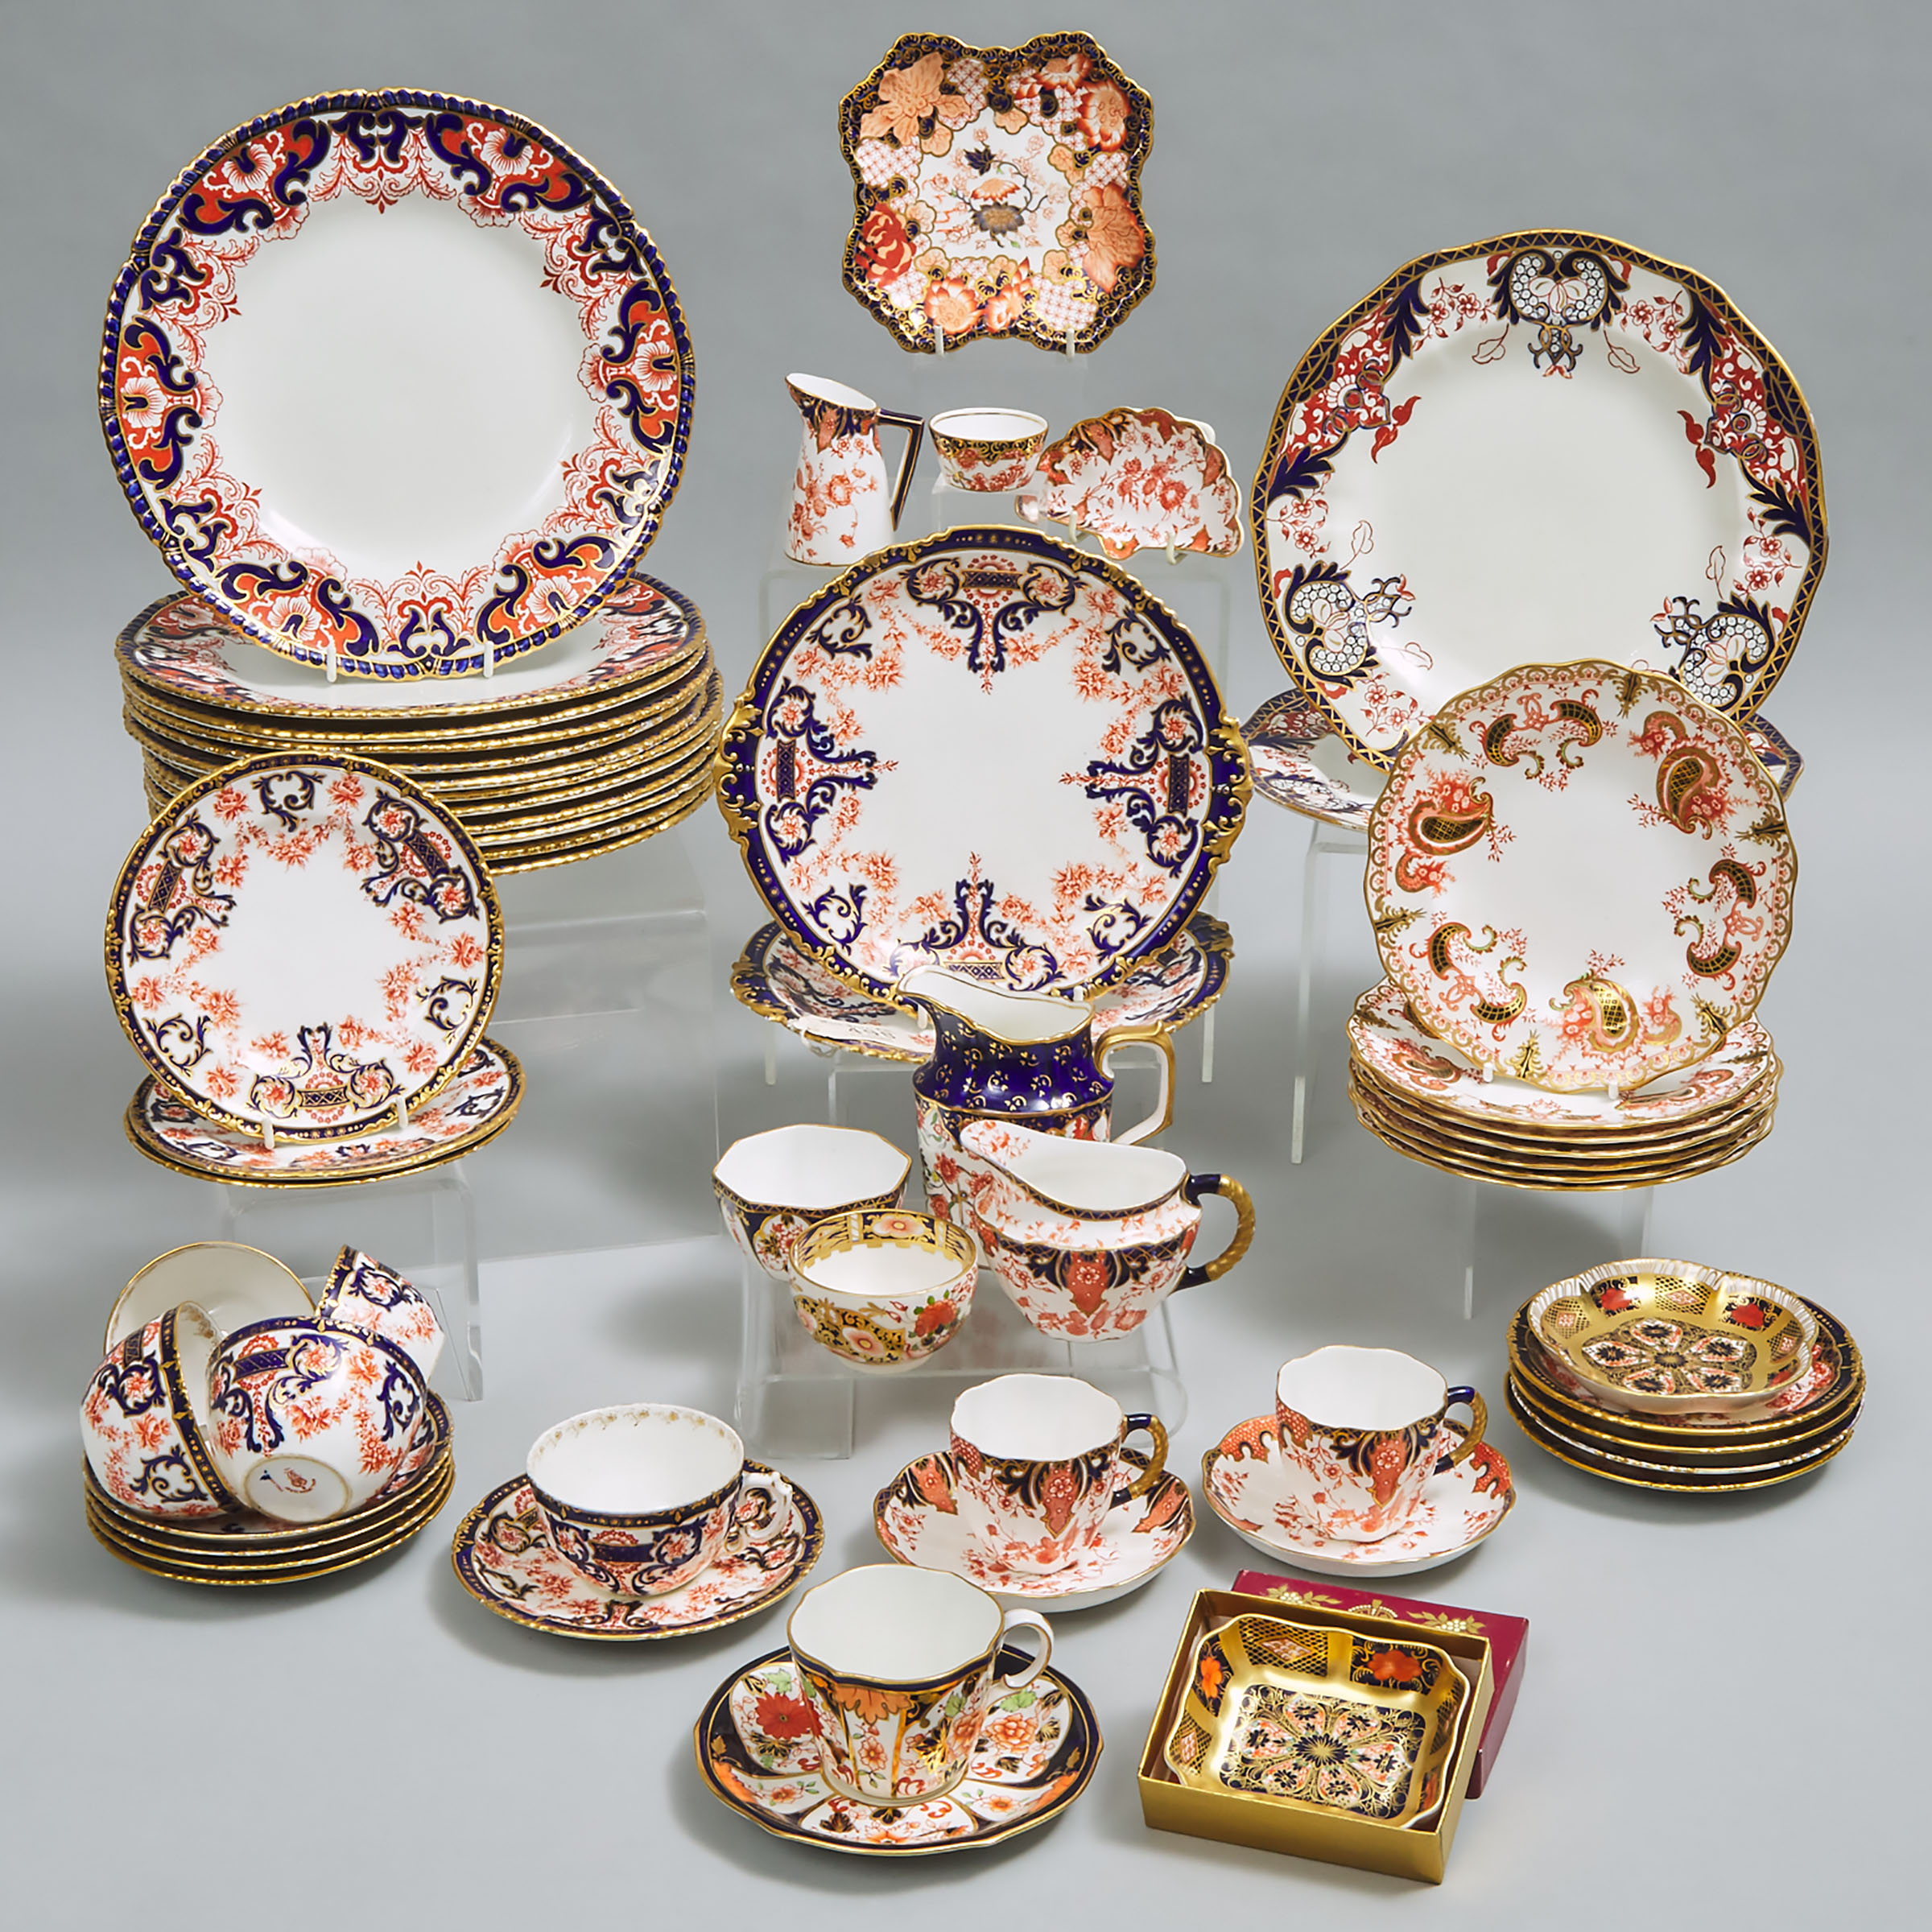 Group of Royal Crown Derby 'Imari' Pattern Tablewares, 19th/20th century